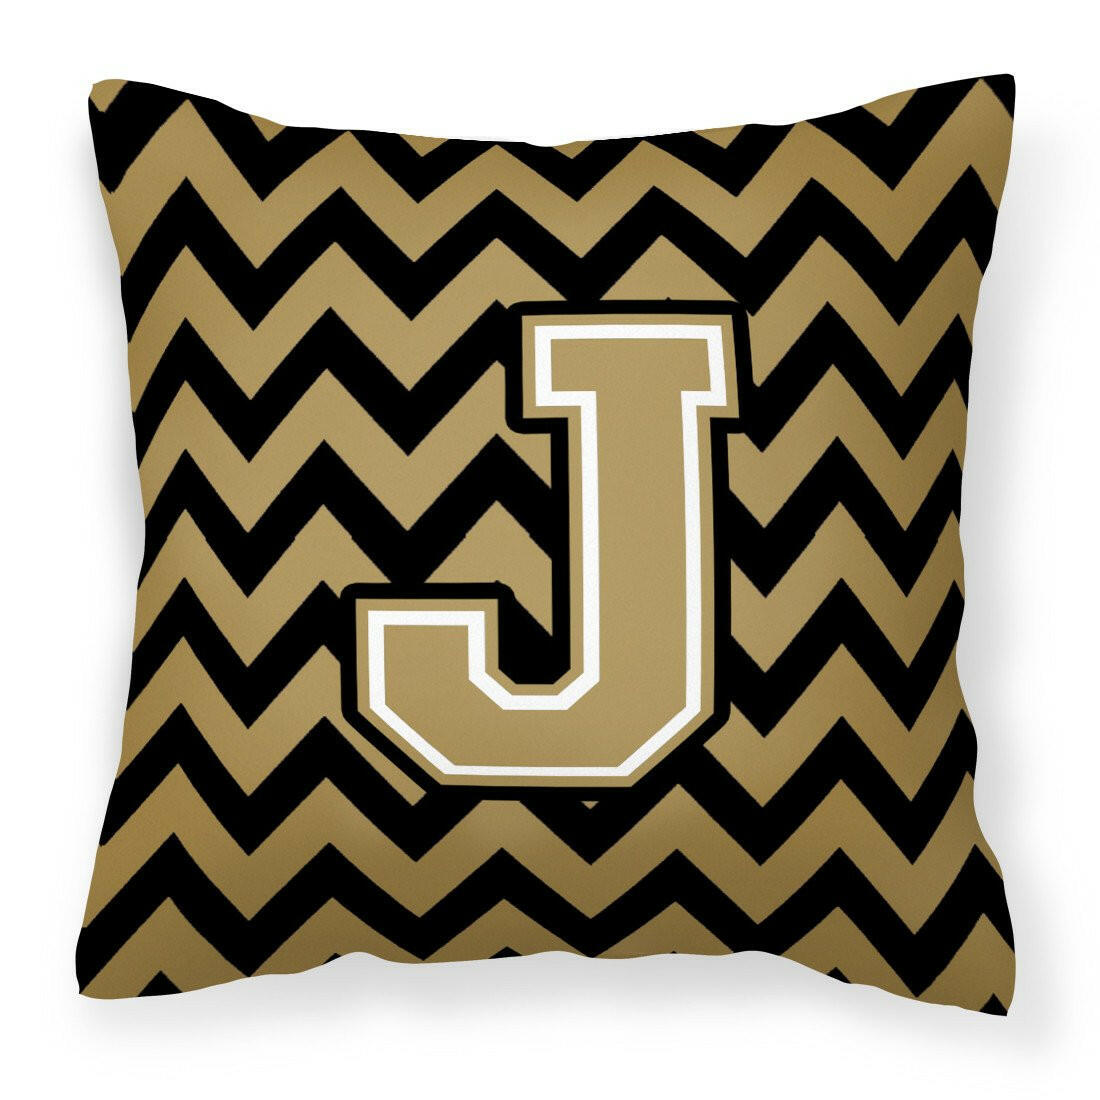 Letter J Chevron Black and Gold  Fabric Decorative Pillow CJ1050-JPW1414 by Caroline's Treasures